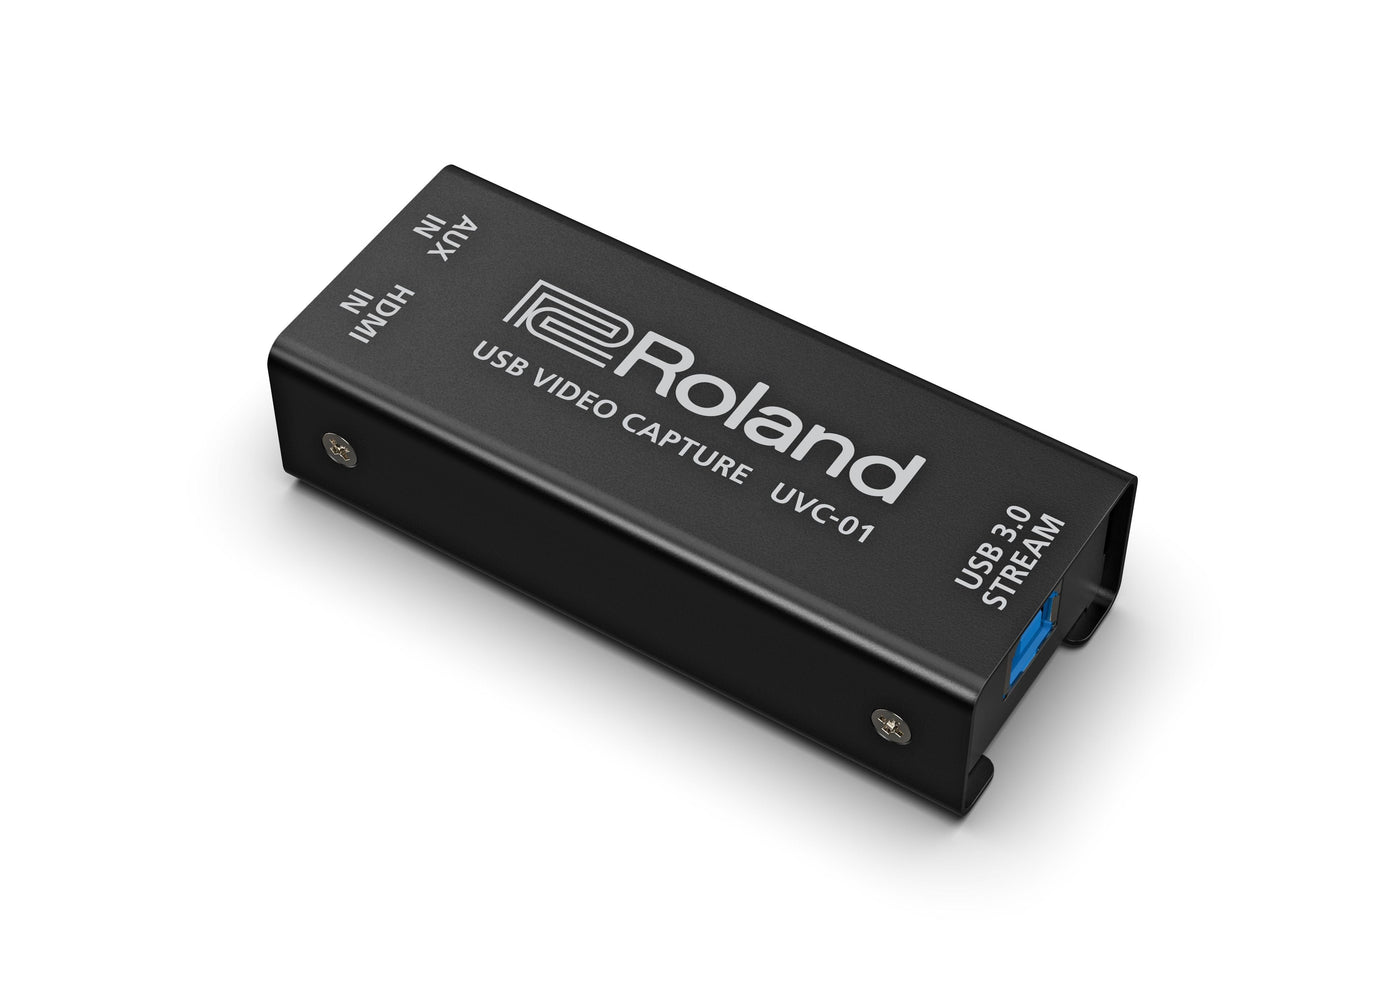 Roland V-60HD STR Video Switcher Web Streaming Bundle with UVC-01 HDMI Encoder